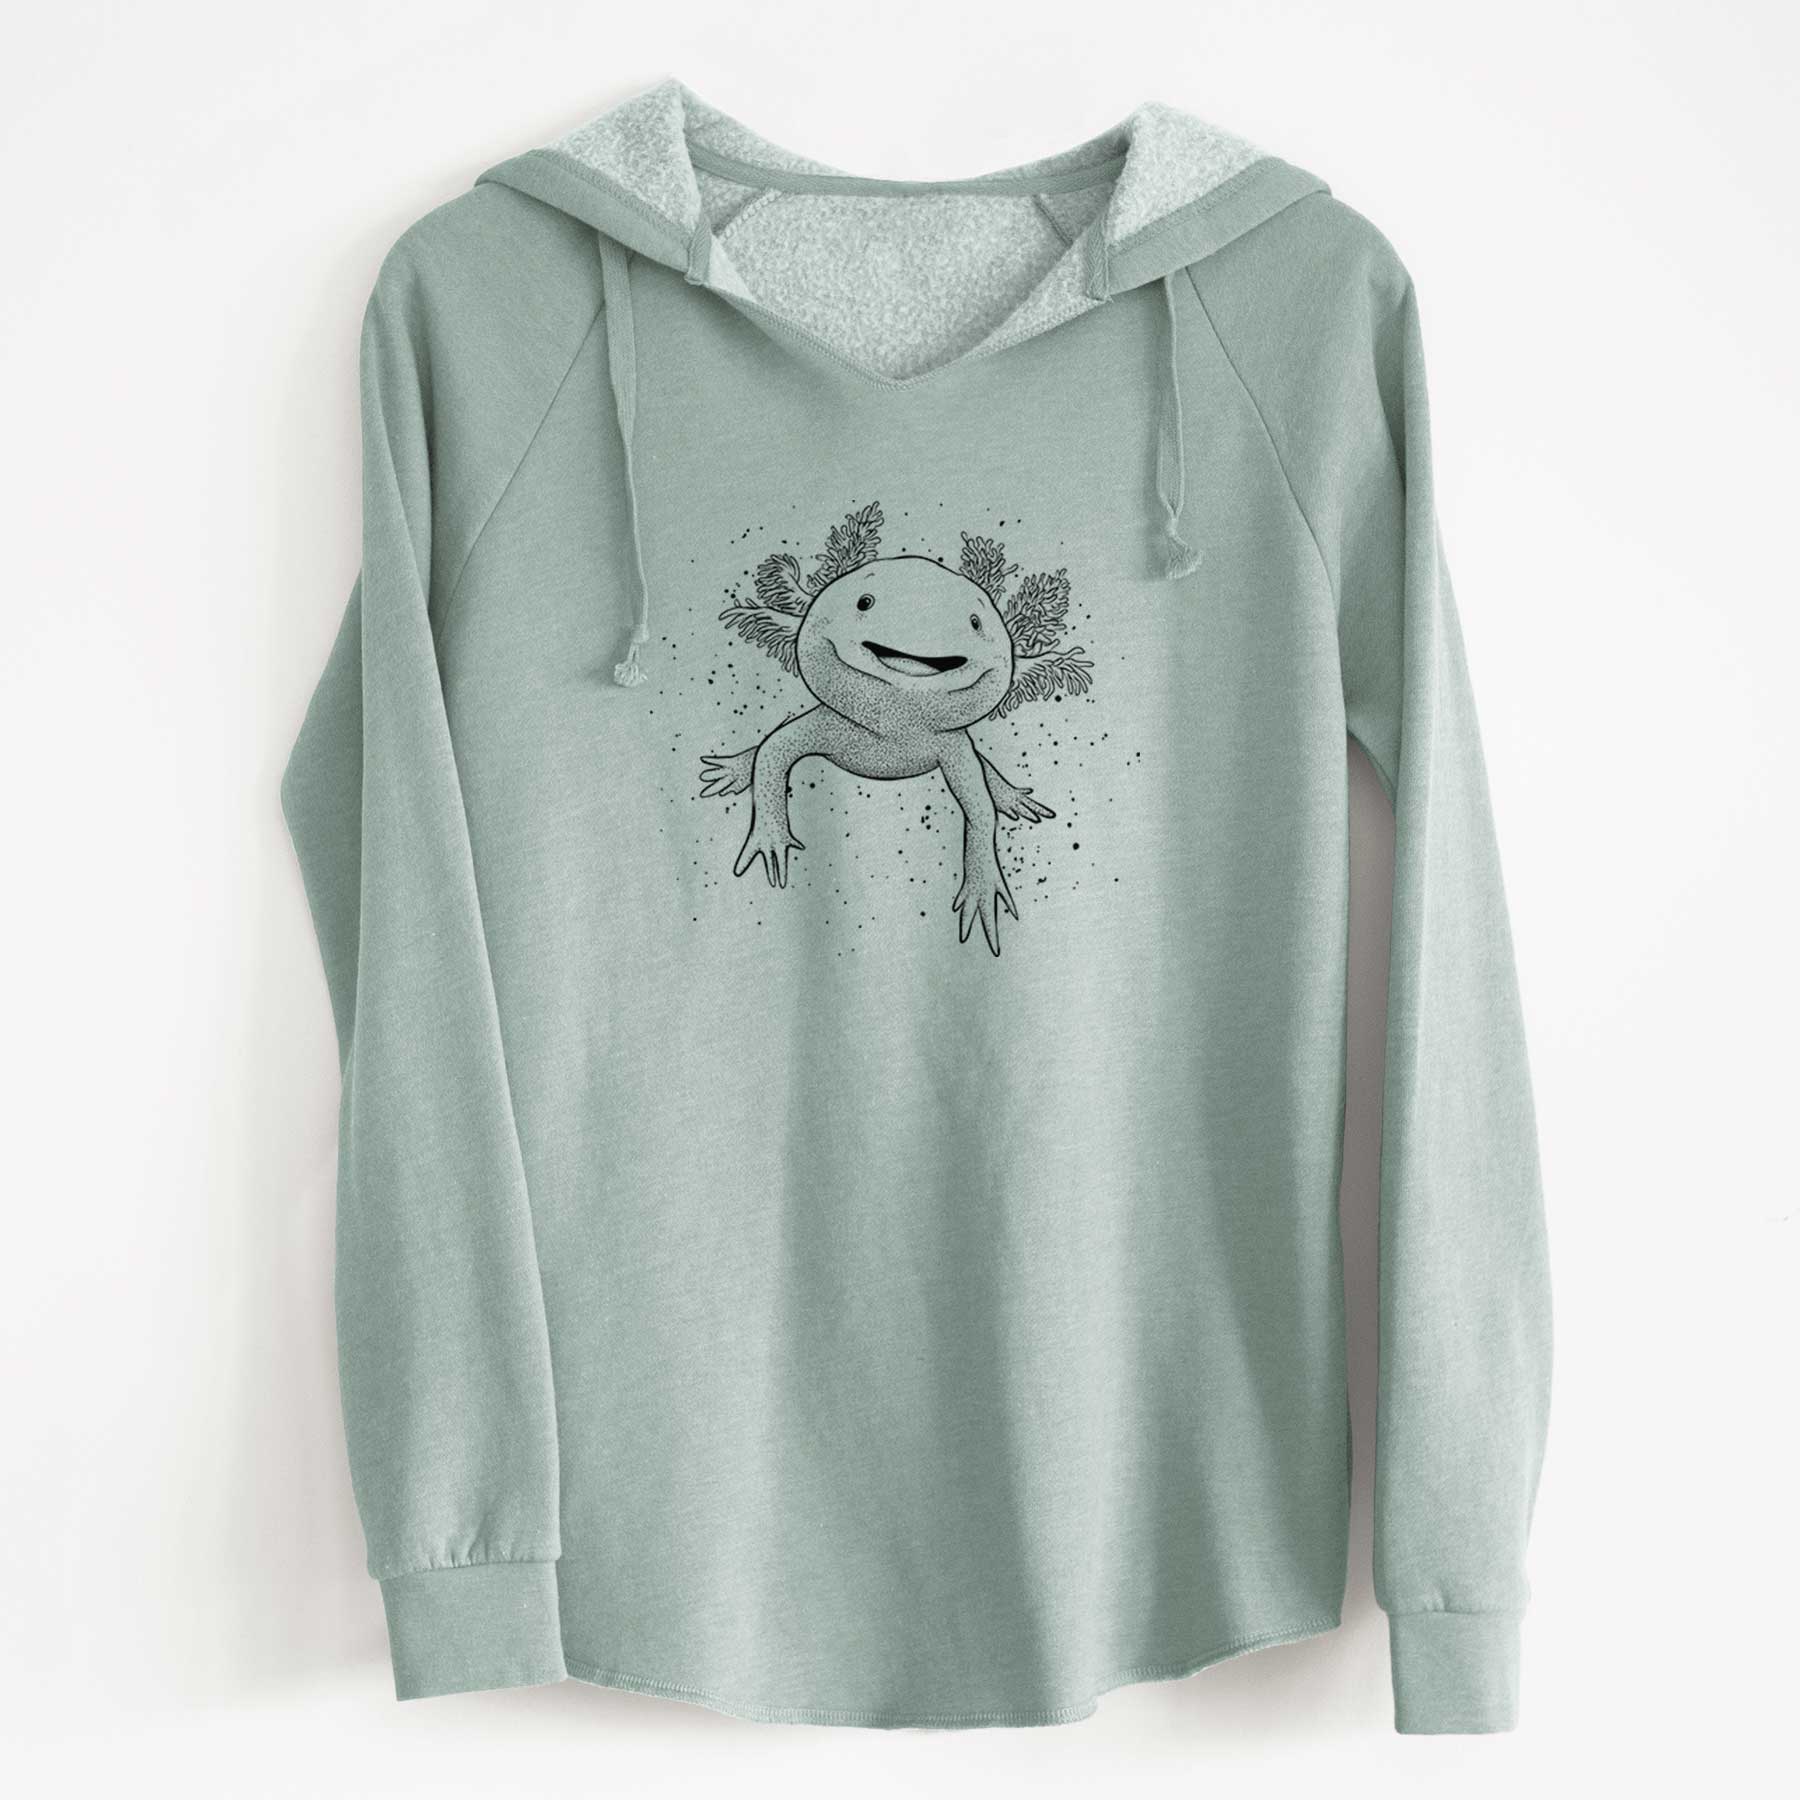 Axolotl Sugar Skull Mexican Bone Flowers - Axolotl Gifts - T-Shirt